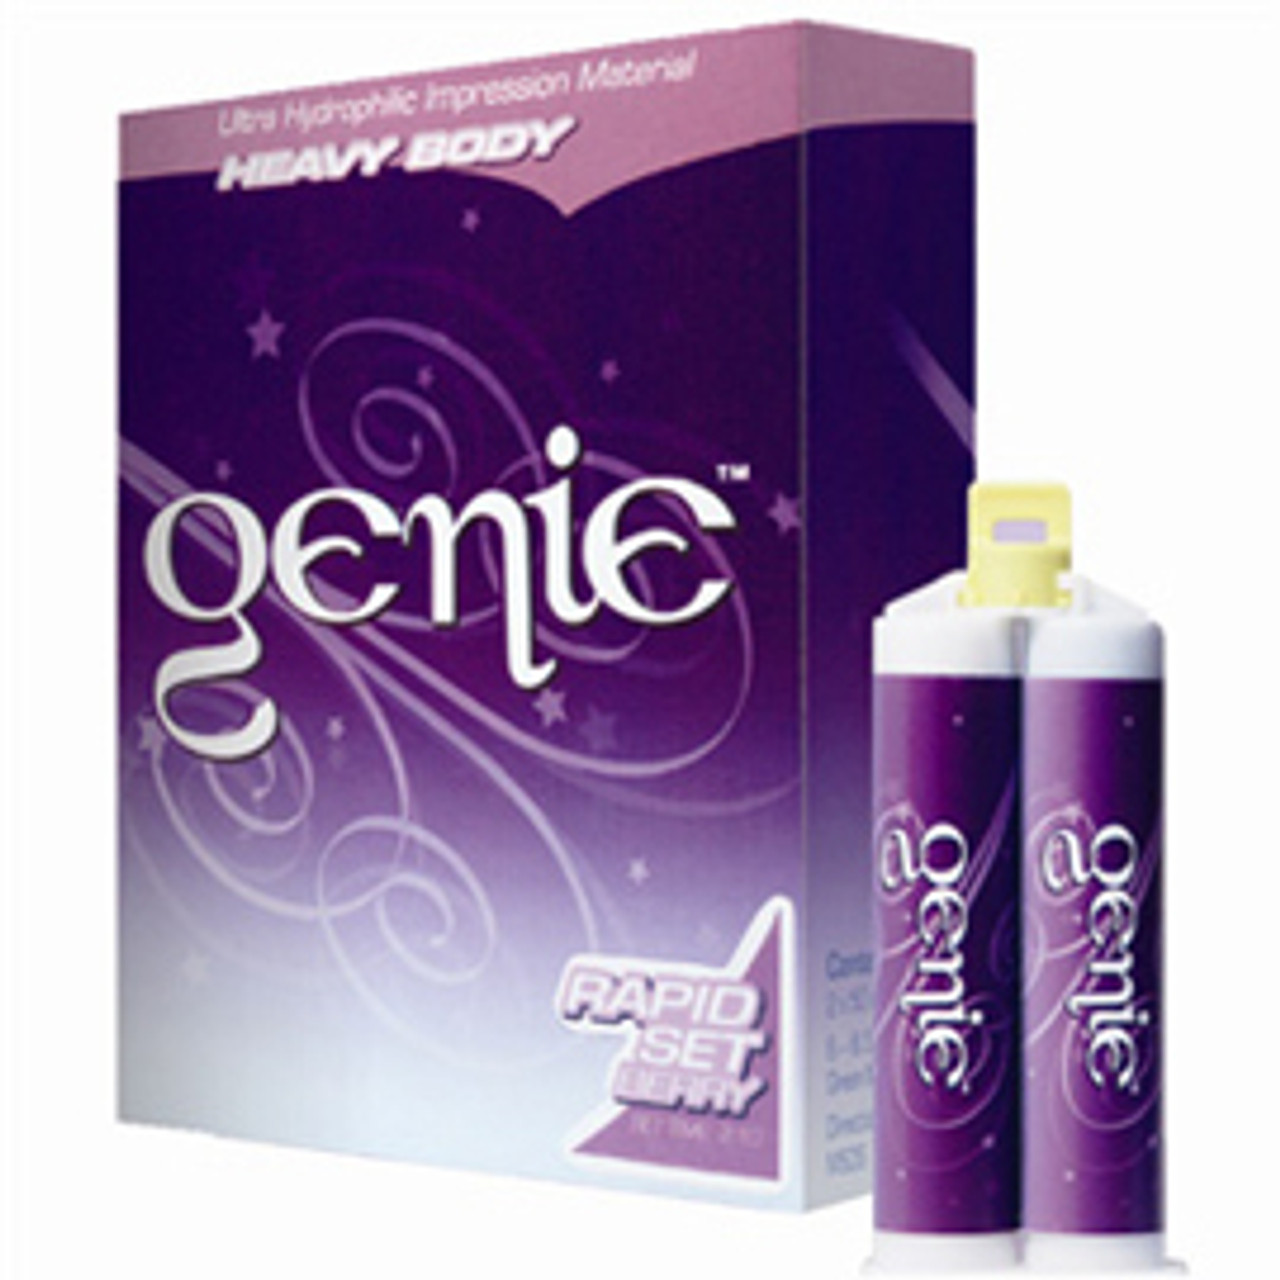 Genie VPS Impression Material, Standard Kit